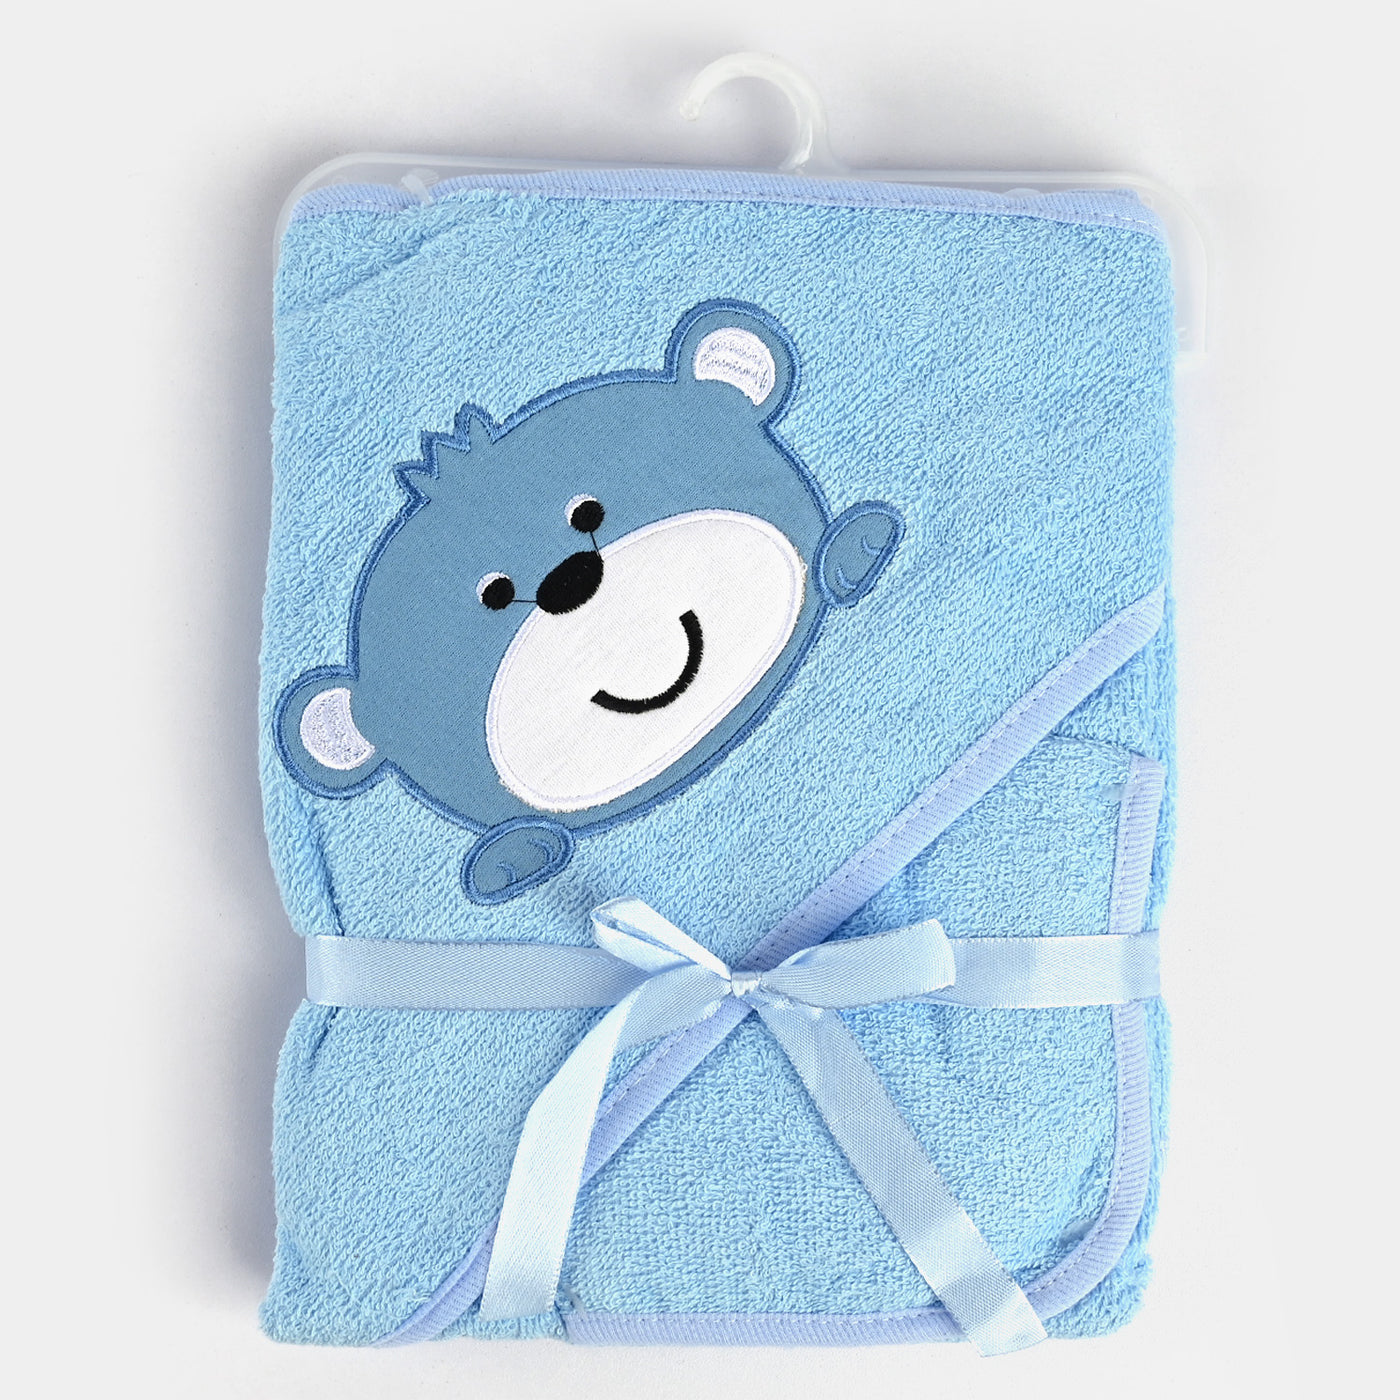 Baby Hooded Bath Towel +1 PCs Face Towel-Blue